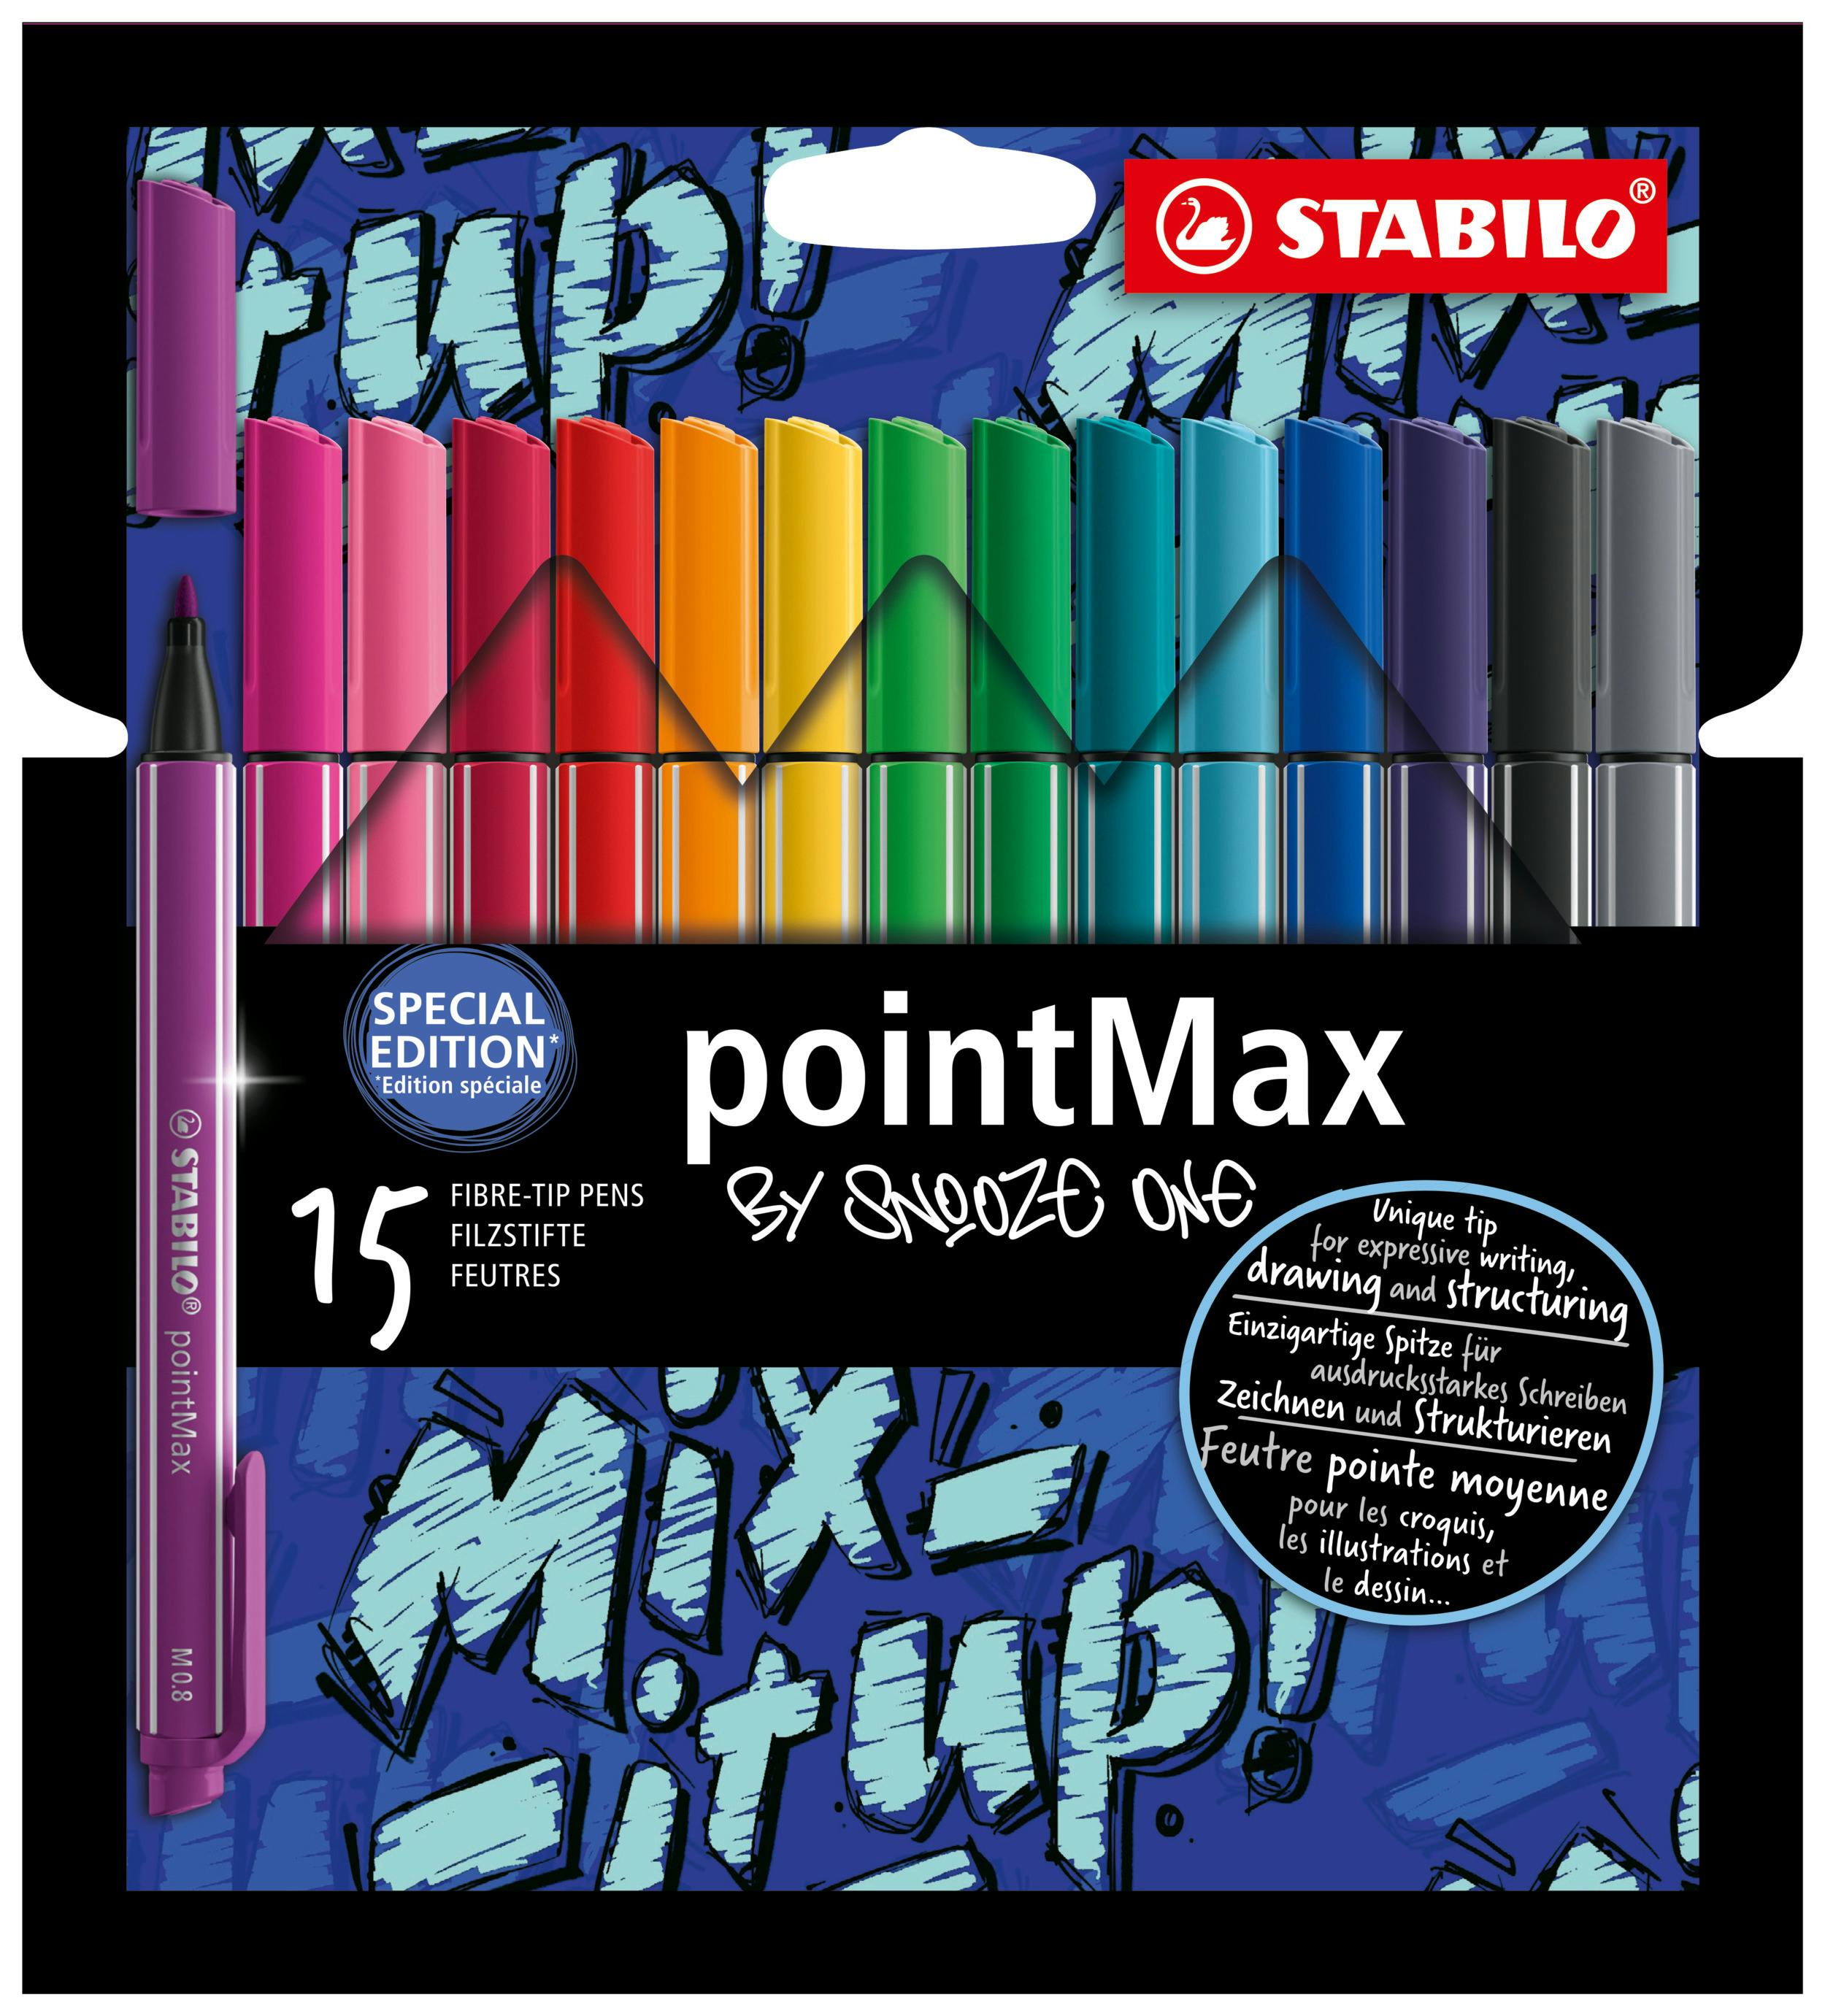 STABILO pointMax stylo-feutre pointe moyenne - Pochette de 4 stylos-feutres  - Noir/Bleu/Rouge/Vert